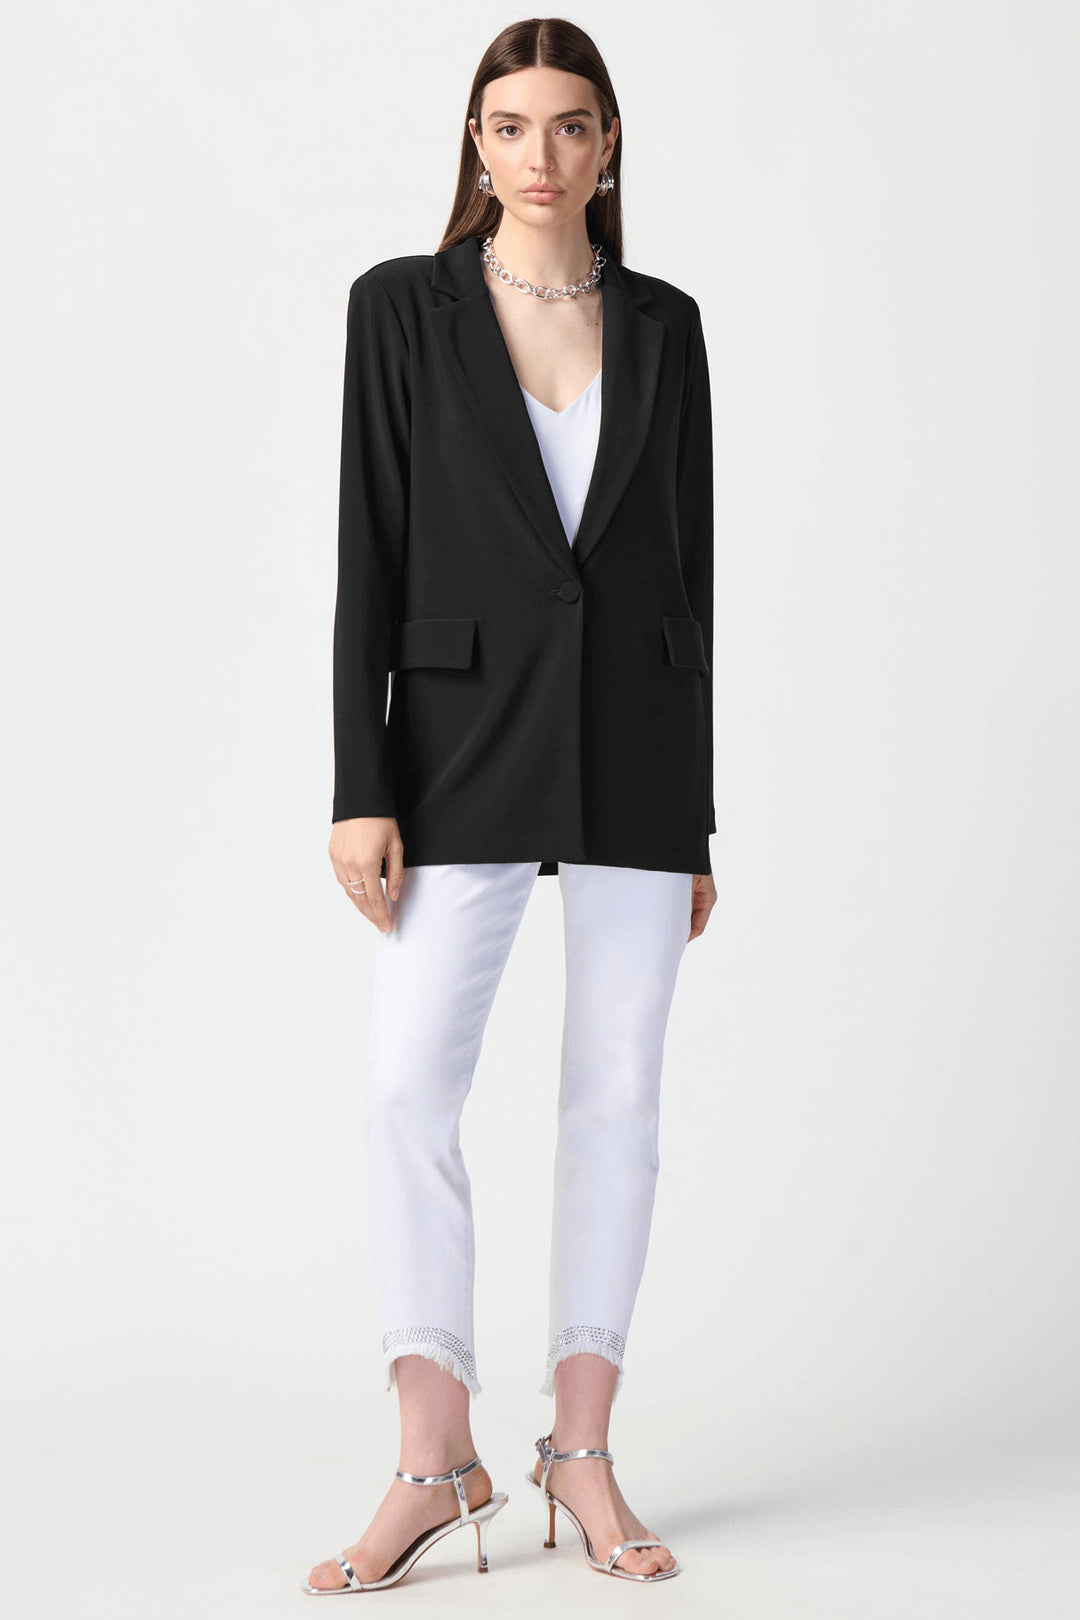 Joseph Ribkoff 231064 Black One Button Jacket - Olivia Grace Fashion